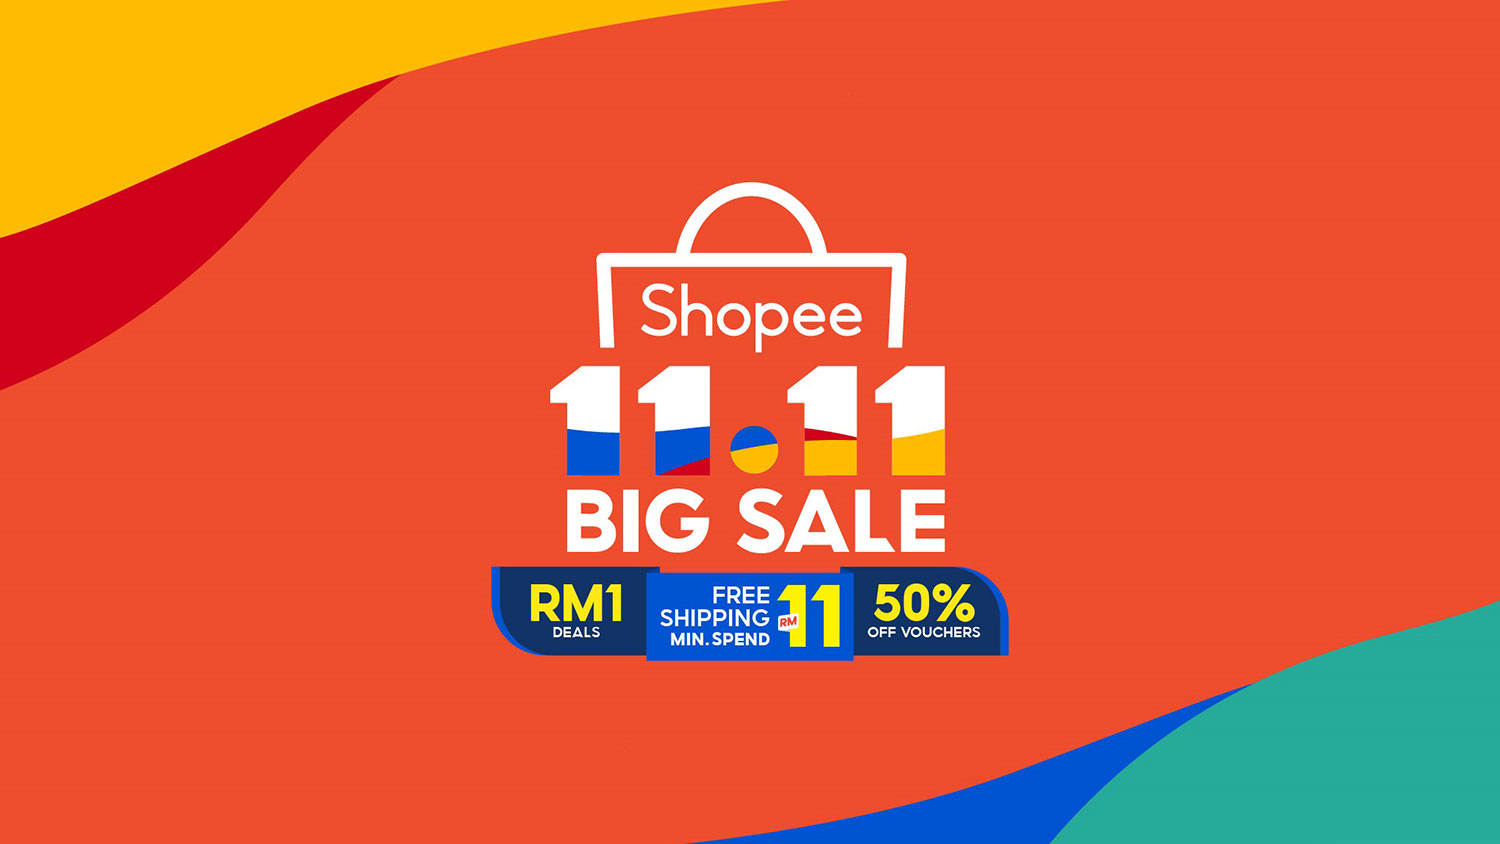 Shopee 11.11 Big Sale Offers Something Bigger